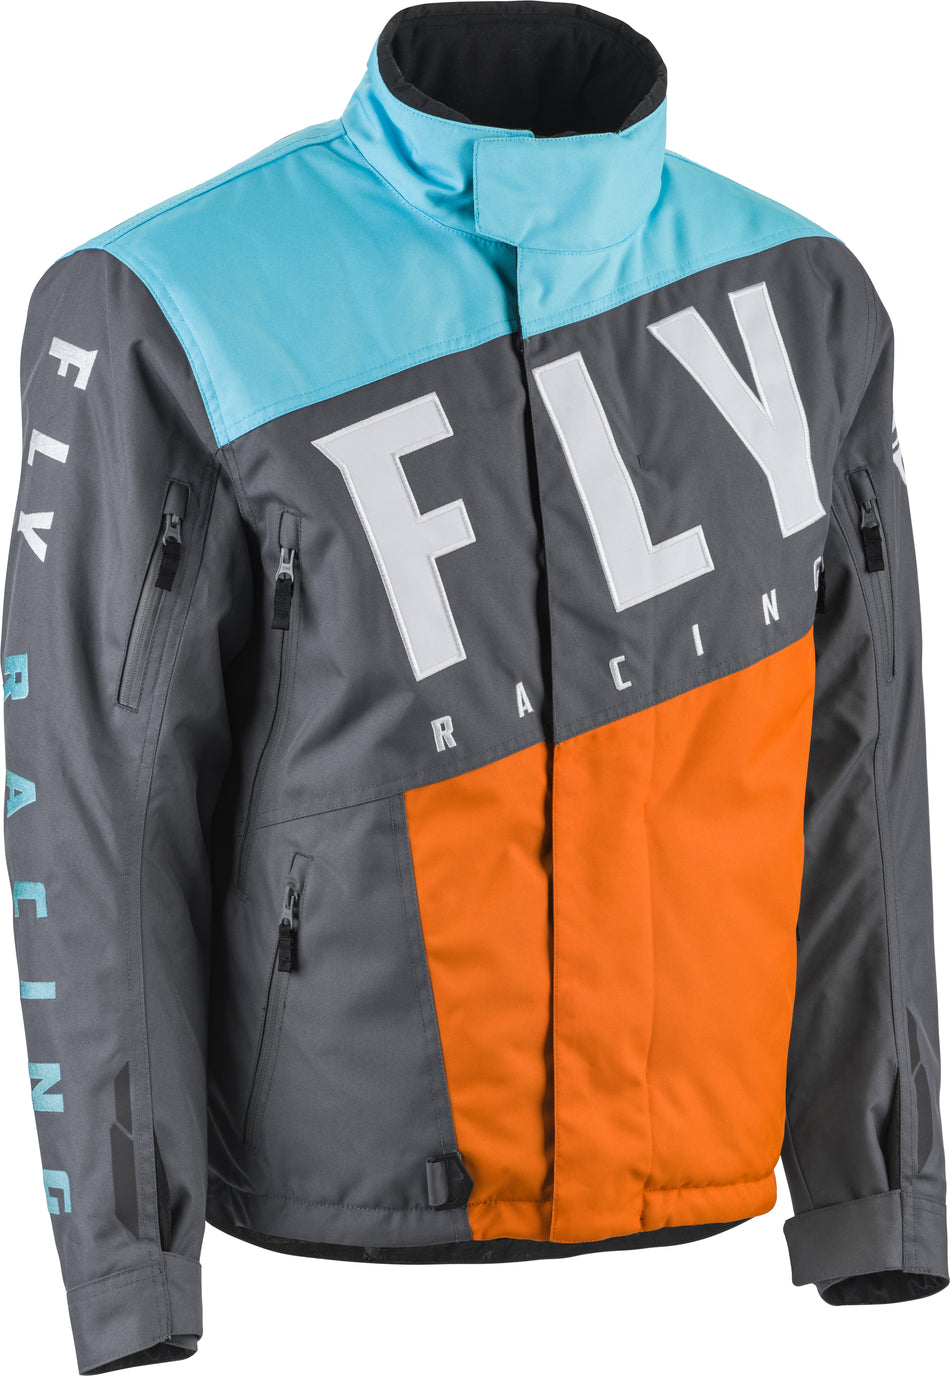 FLY RACING Snx Pro Jacket Orange/Light Blue/Black 4x 470-41144X